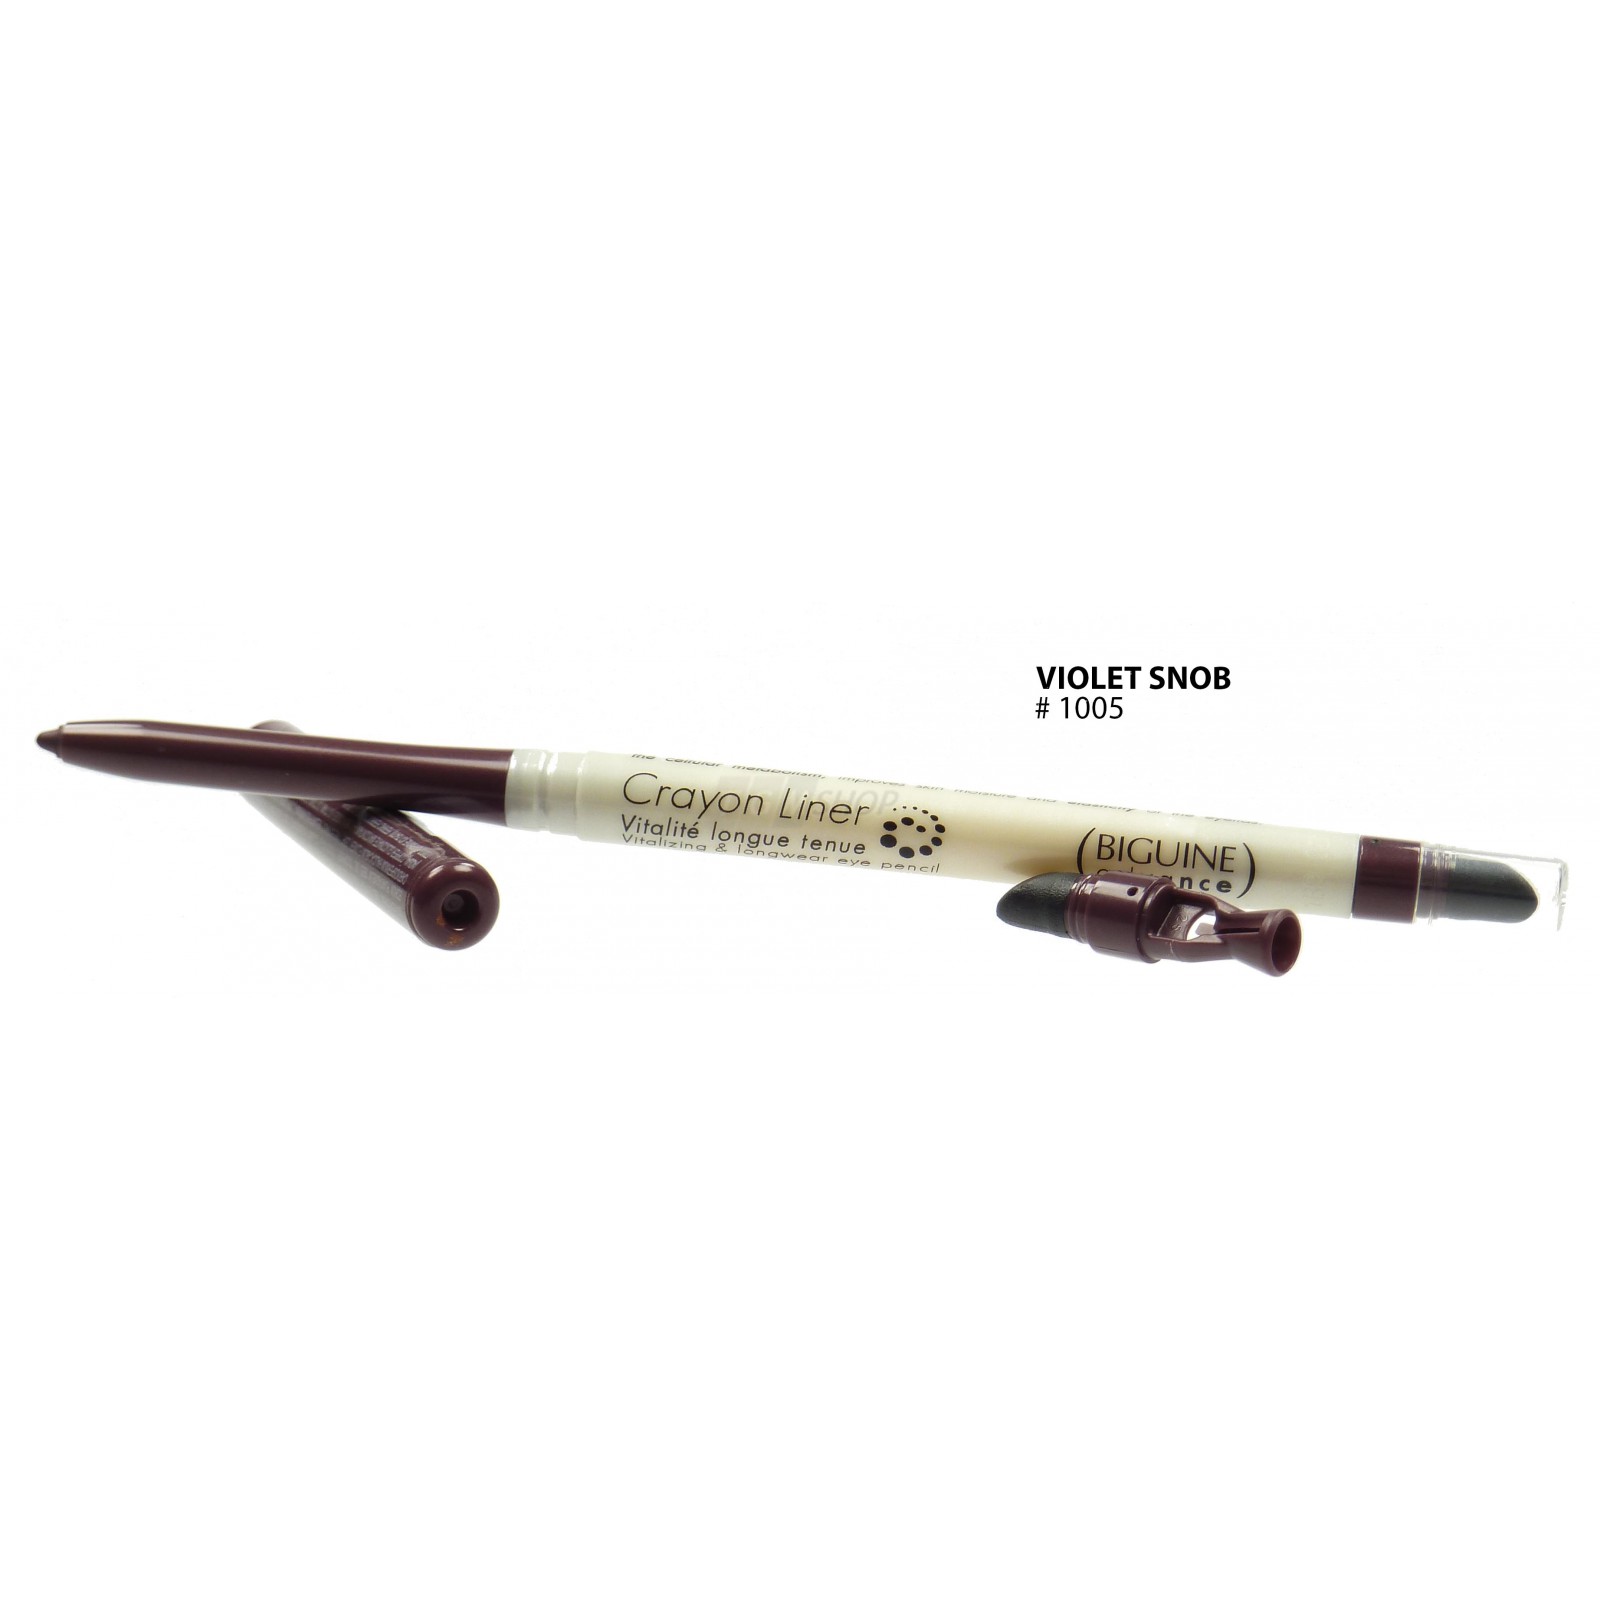 BIGUINE ADVANCE - CRAYON LINER VITALITE LONGUE TENUE Augen Stift Make up - 0-35g - 1005 Violet Snob